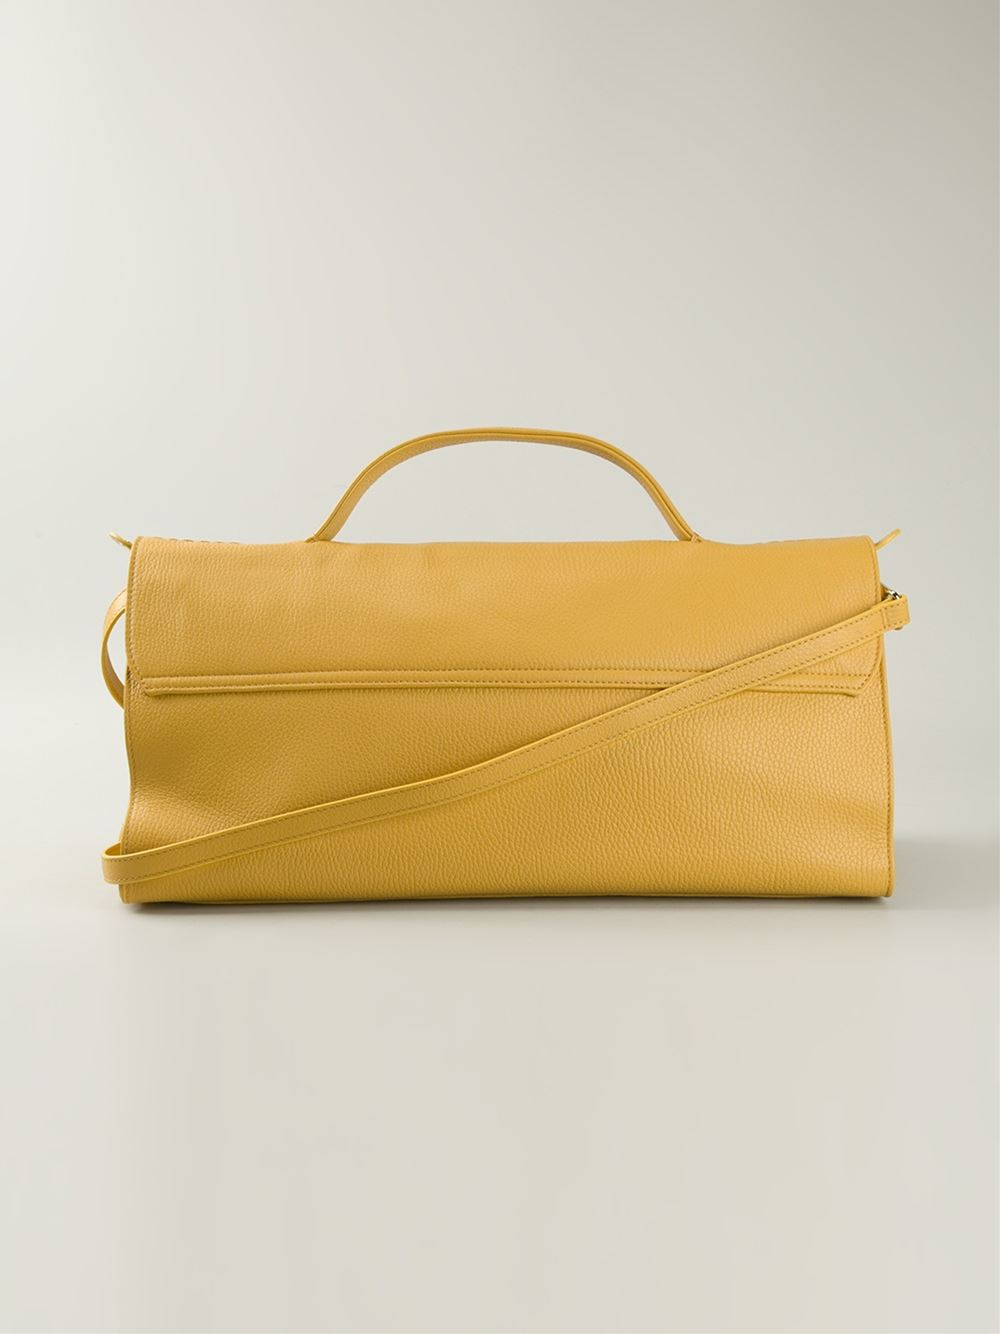 Lyst - Zanellato Classic Rectangular Tote Bag in Yellow